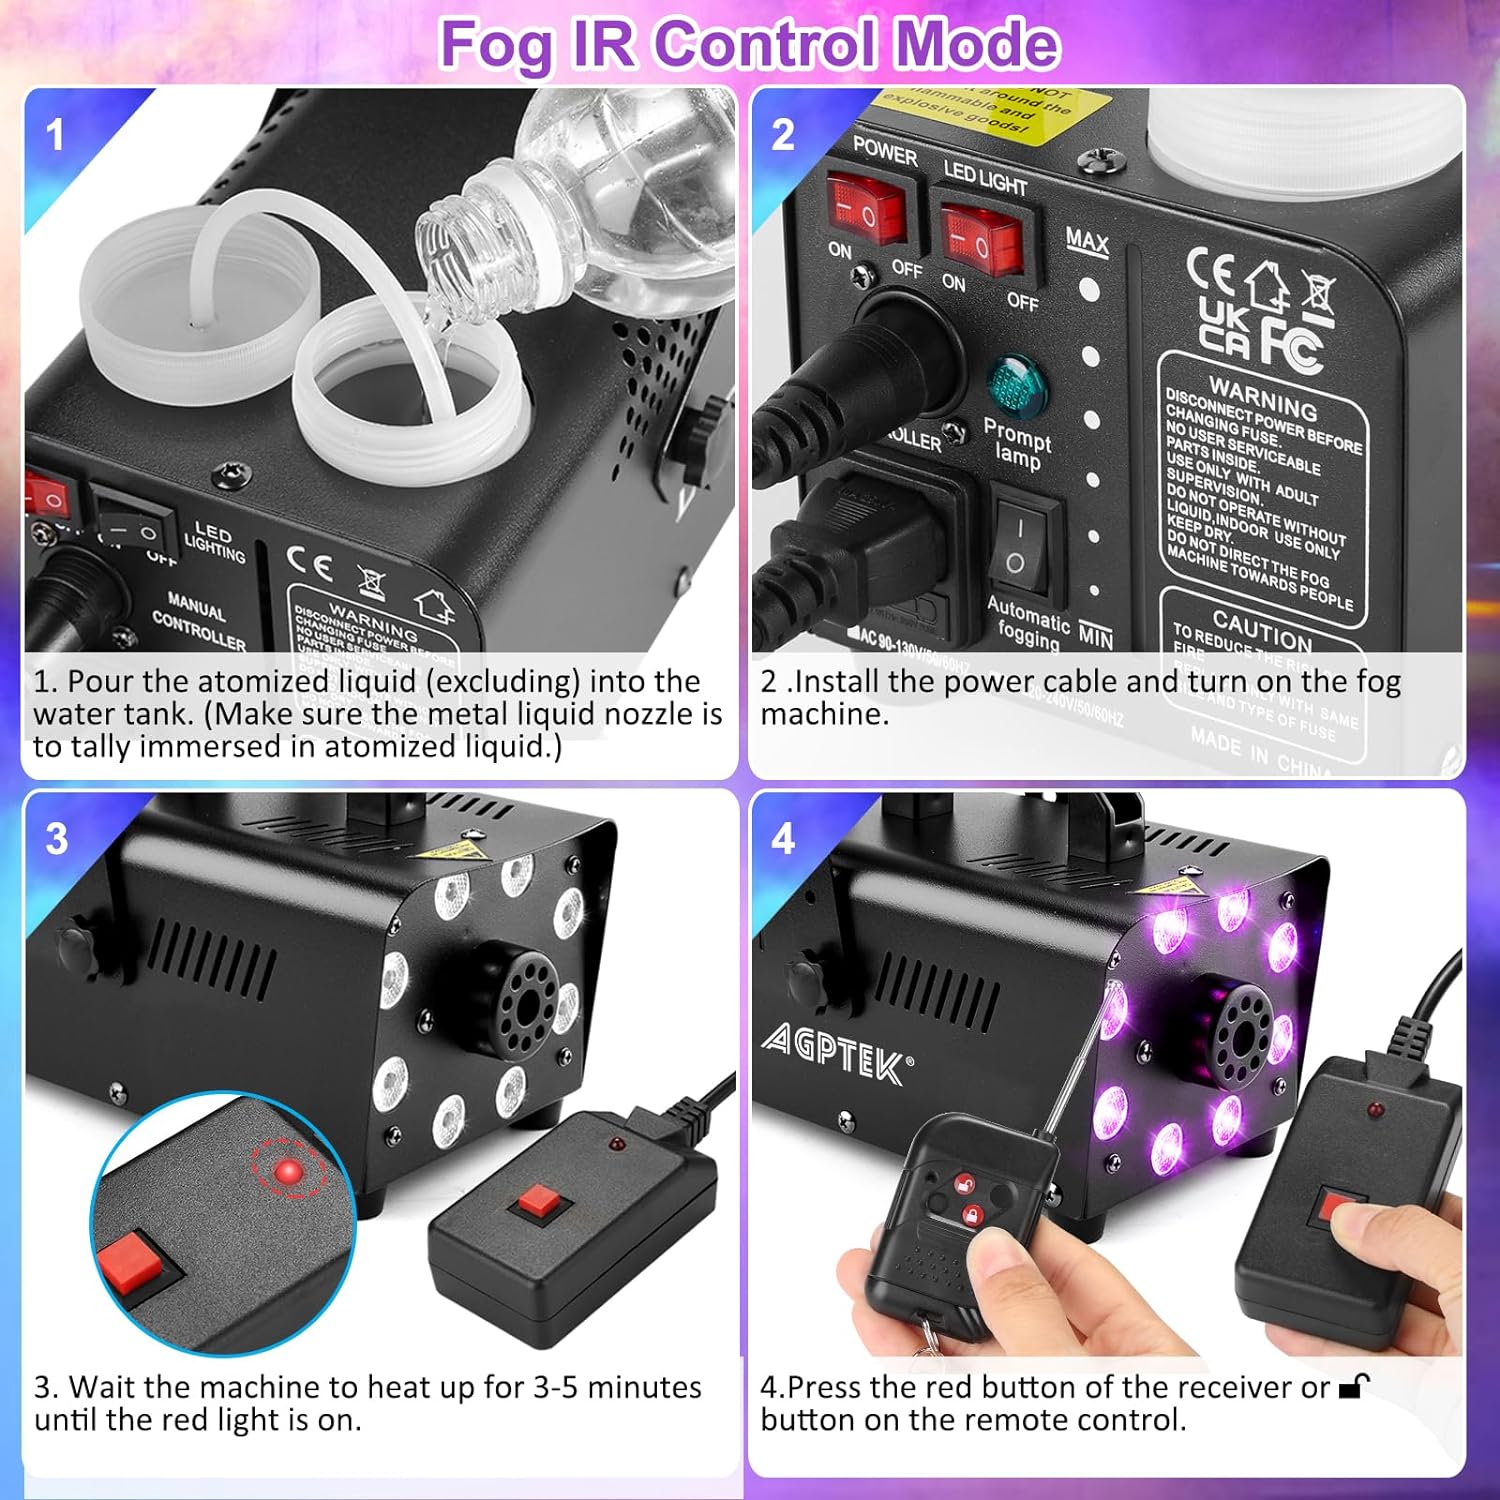 AGPTEK Smoke Machine, Fog Machine with 13 Colorful LED Lights Effect - $50